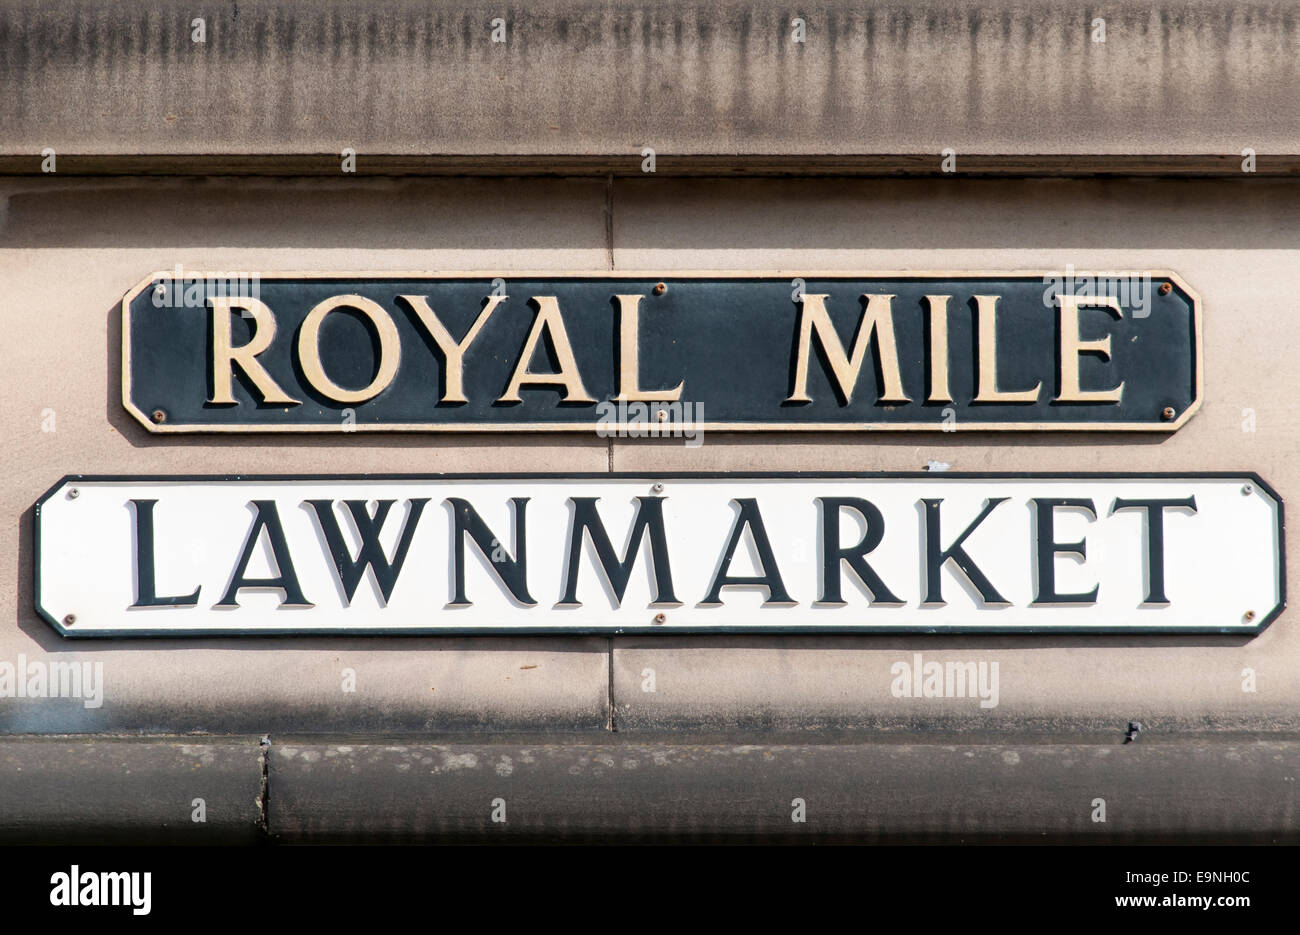 Royal Mile and Lawnmarket Street Sign, Edinburgh, Scotland, UK Stock Photo